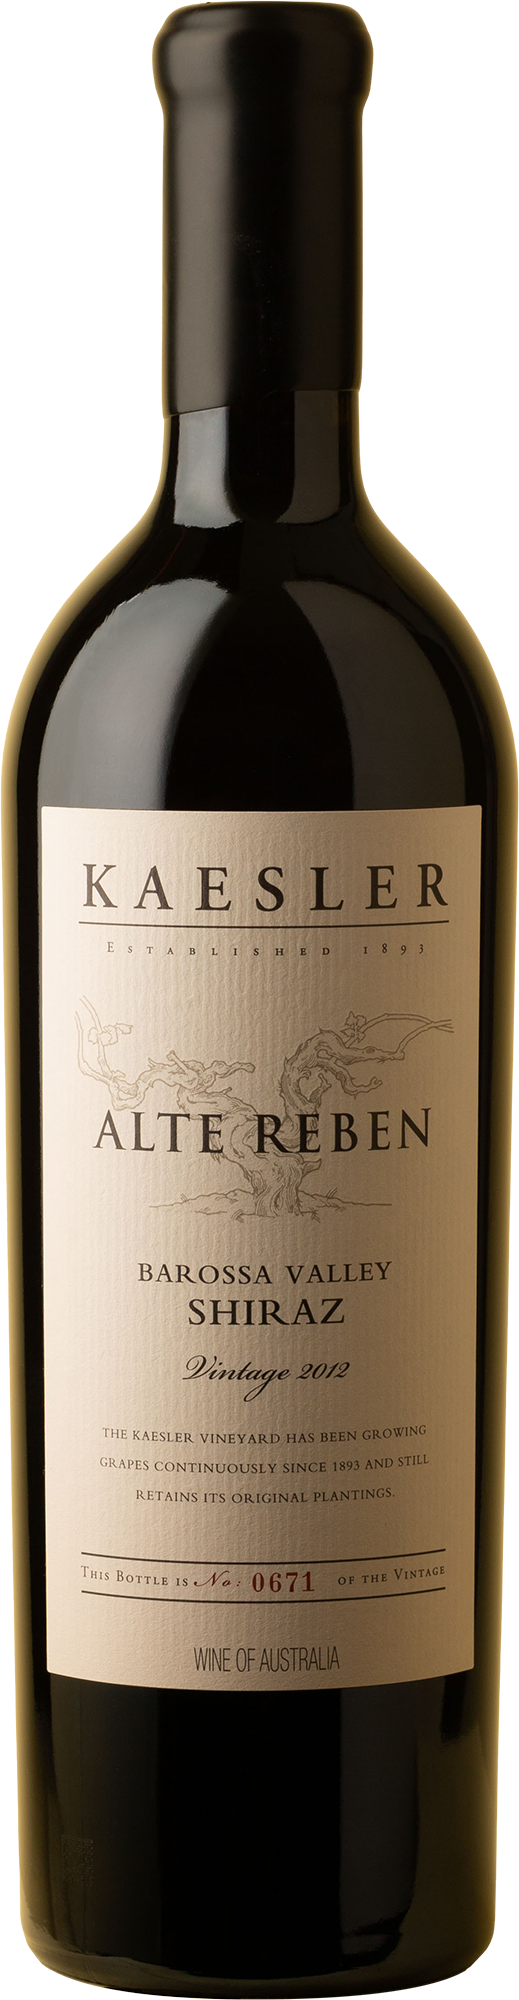 Kaesler - Alte Reben Shiraz 2012 Red Wine